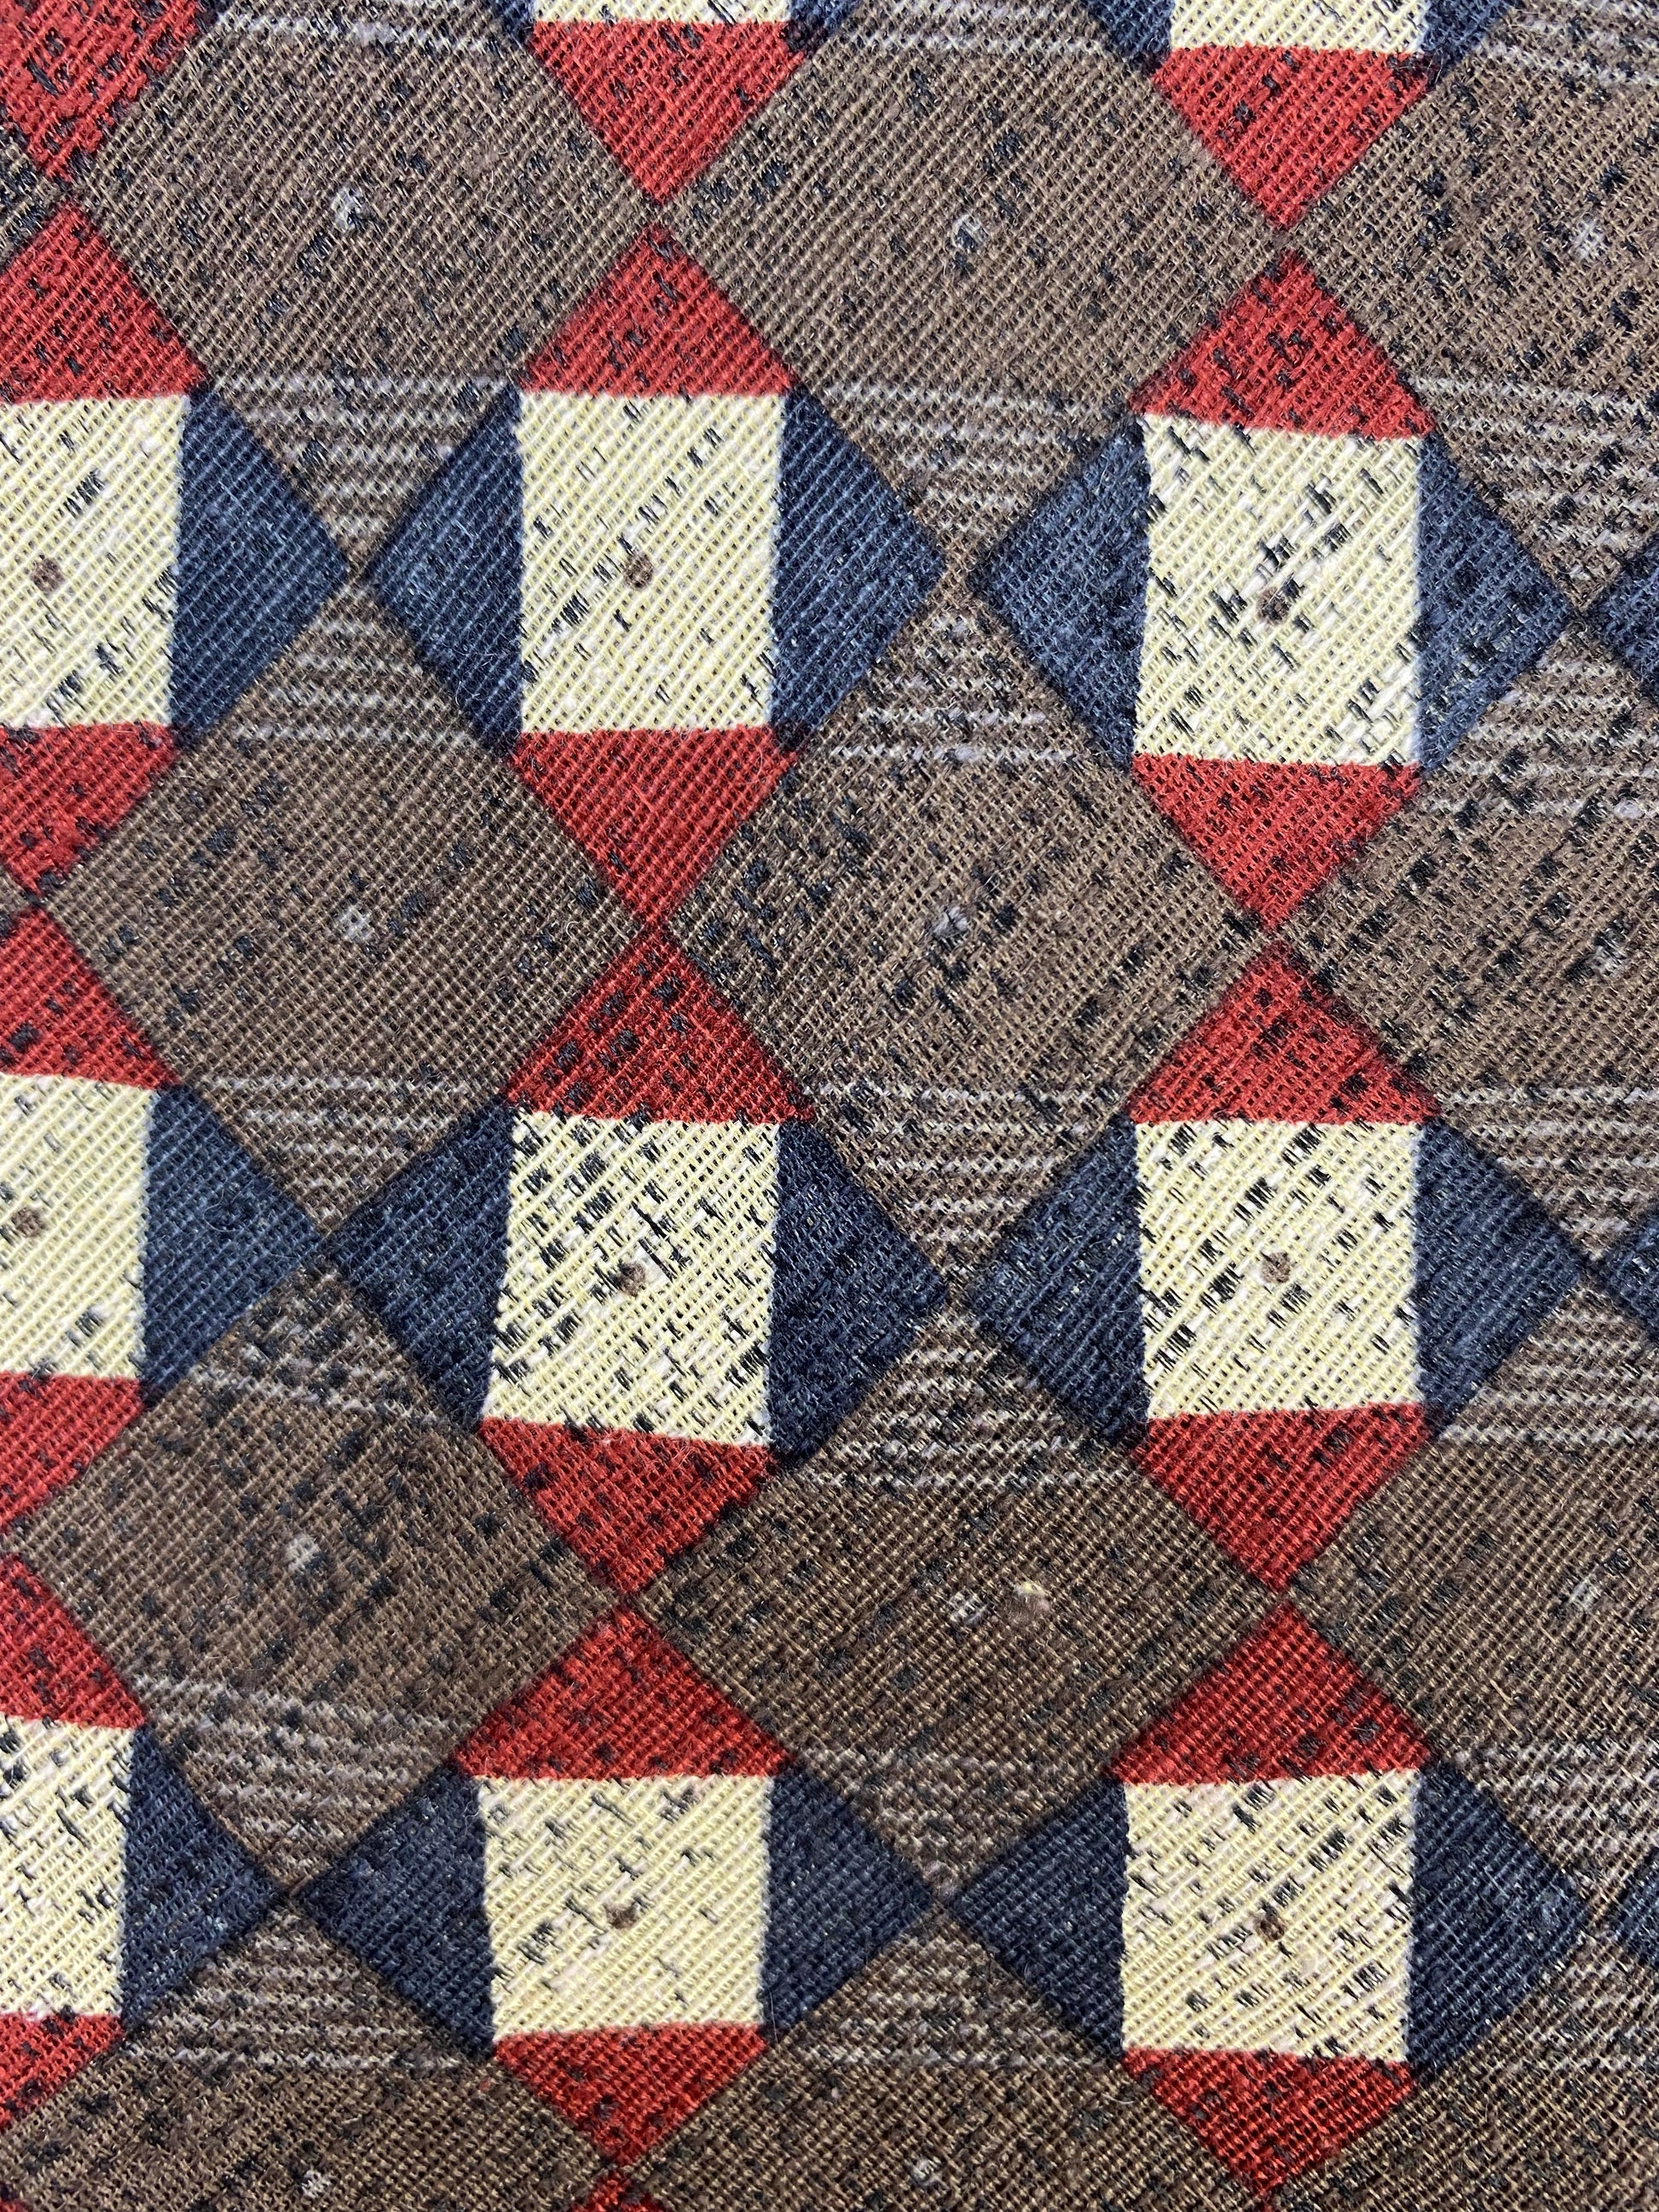 Close-up detail of: 90s Deadstock Silk Necktie, Men's Vintage Taupe/ Red/ Blue Check Pattern Tie, NOS